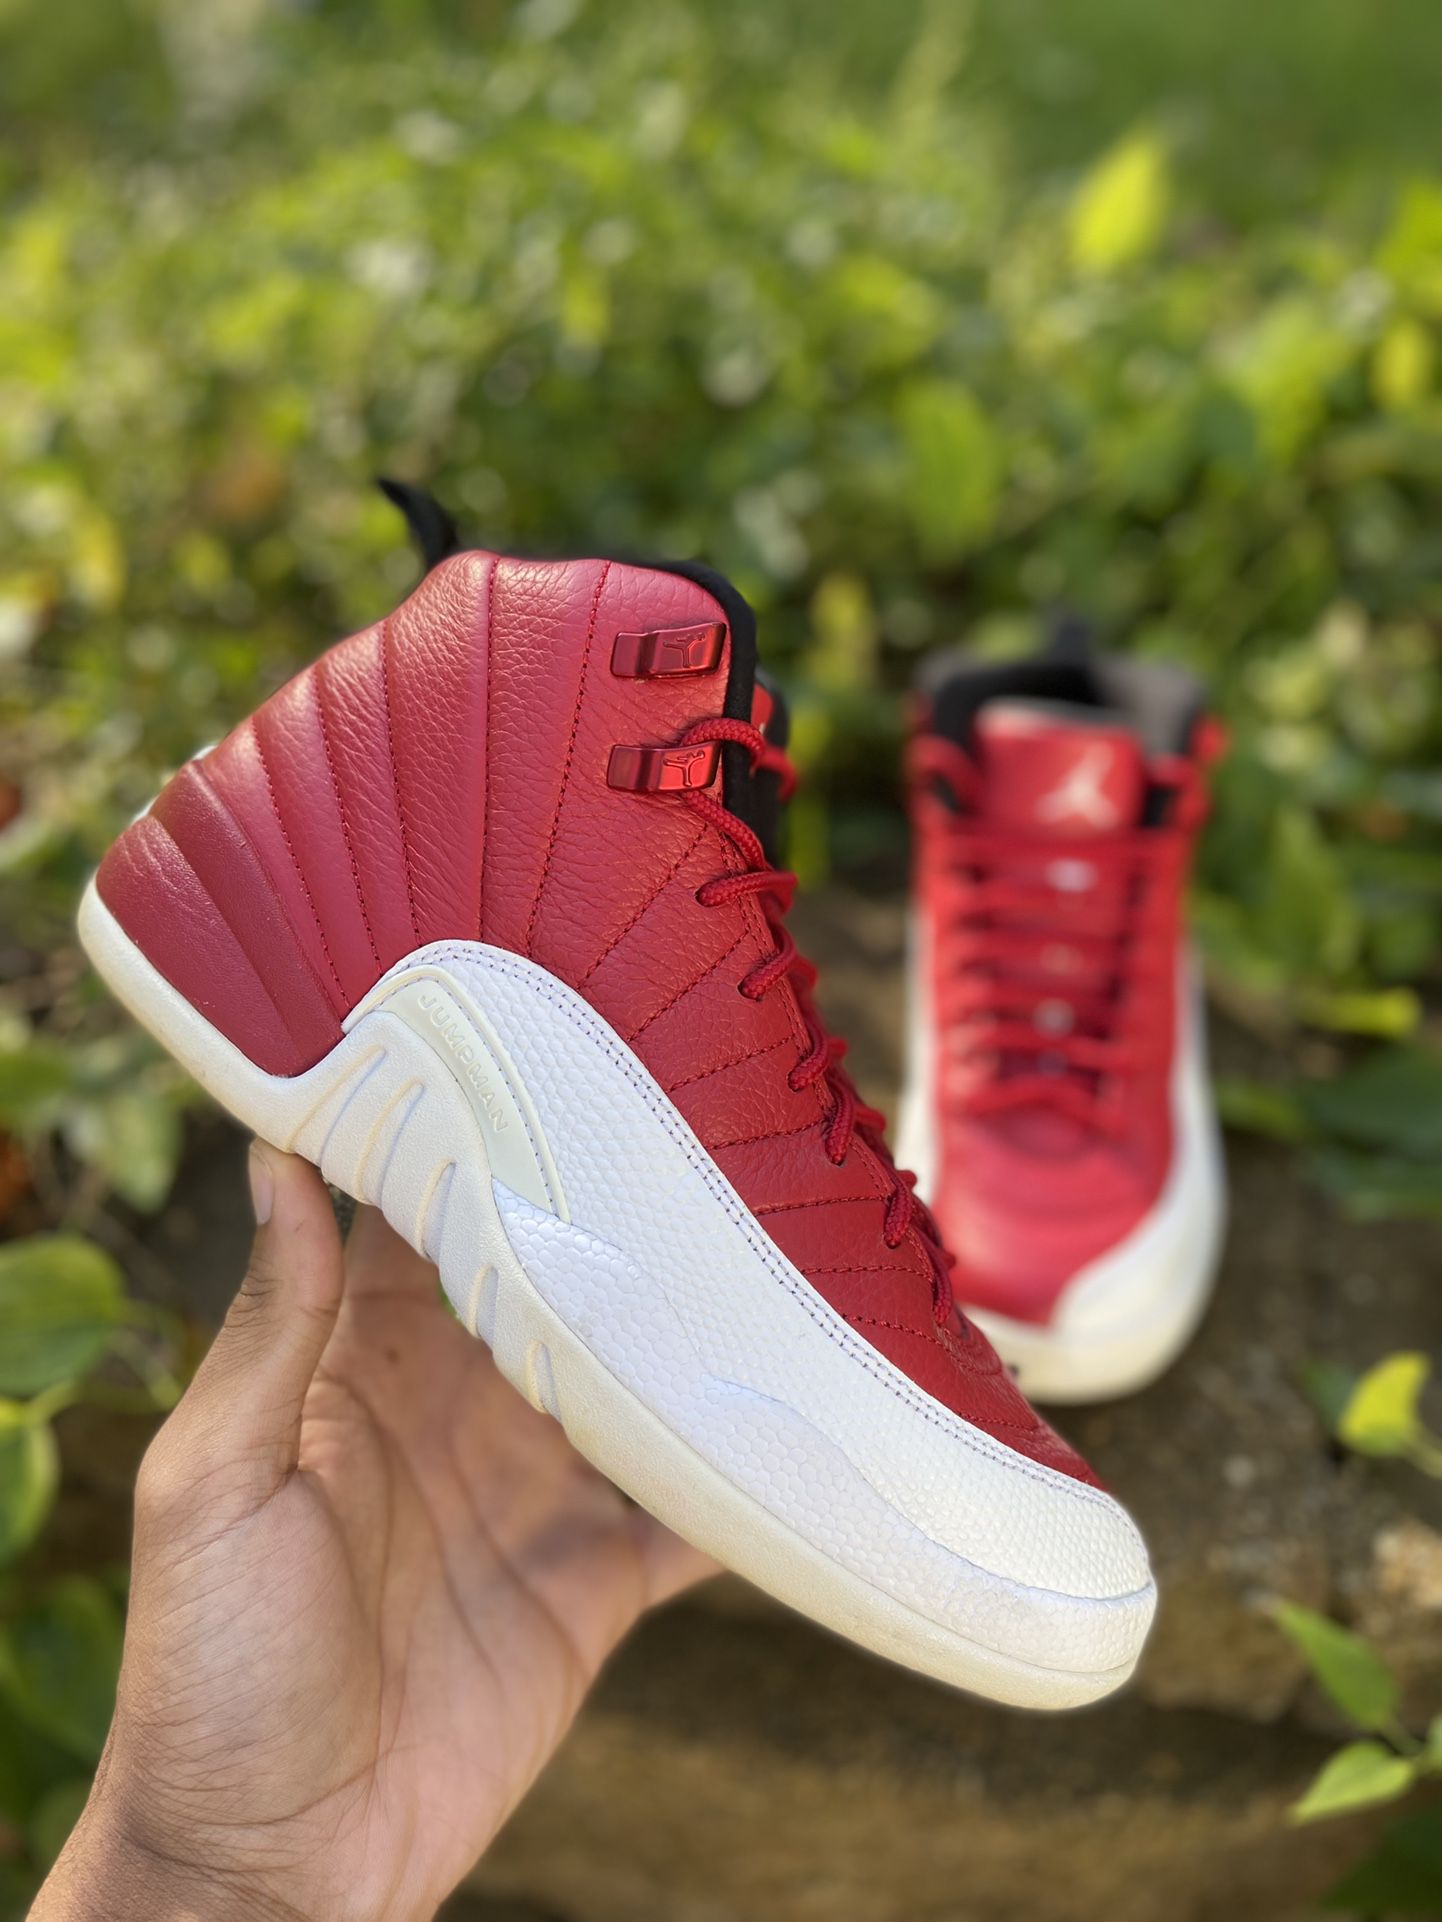 Nike Jordan 12 Retro ‘Gym Red’ Size 6 Youth (7.5 women’s)